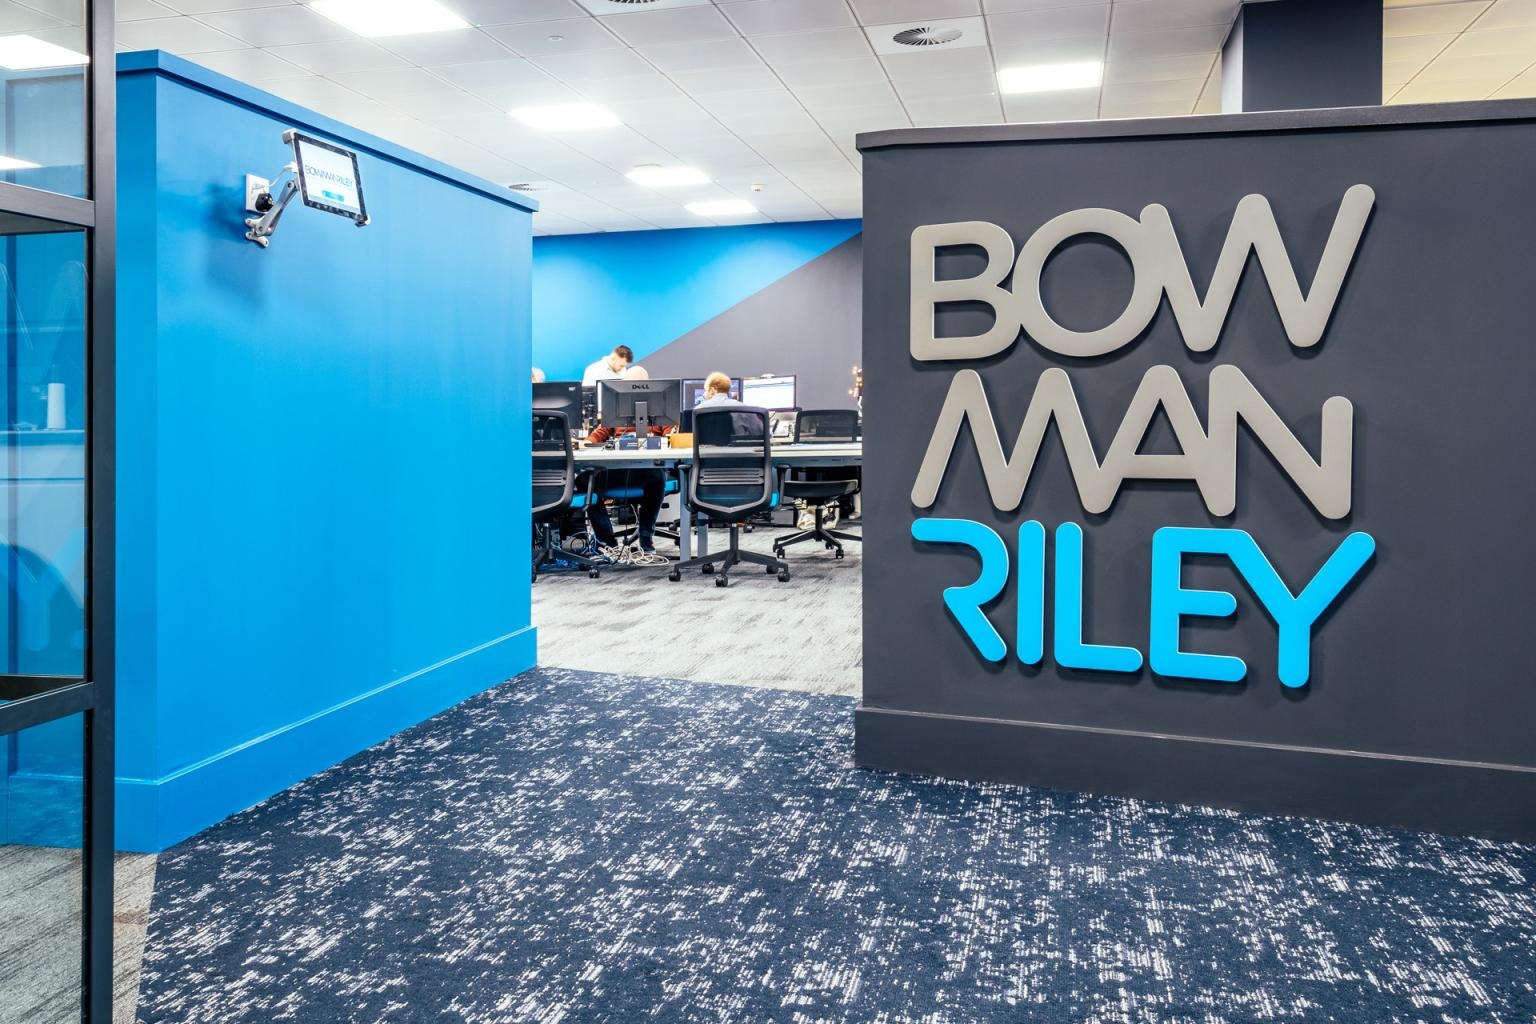 A true-showcase of world class office design: Bowman Riley